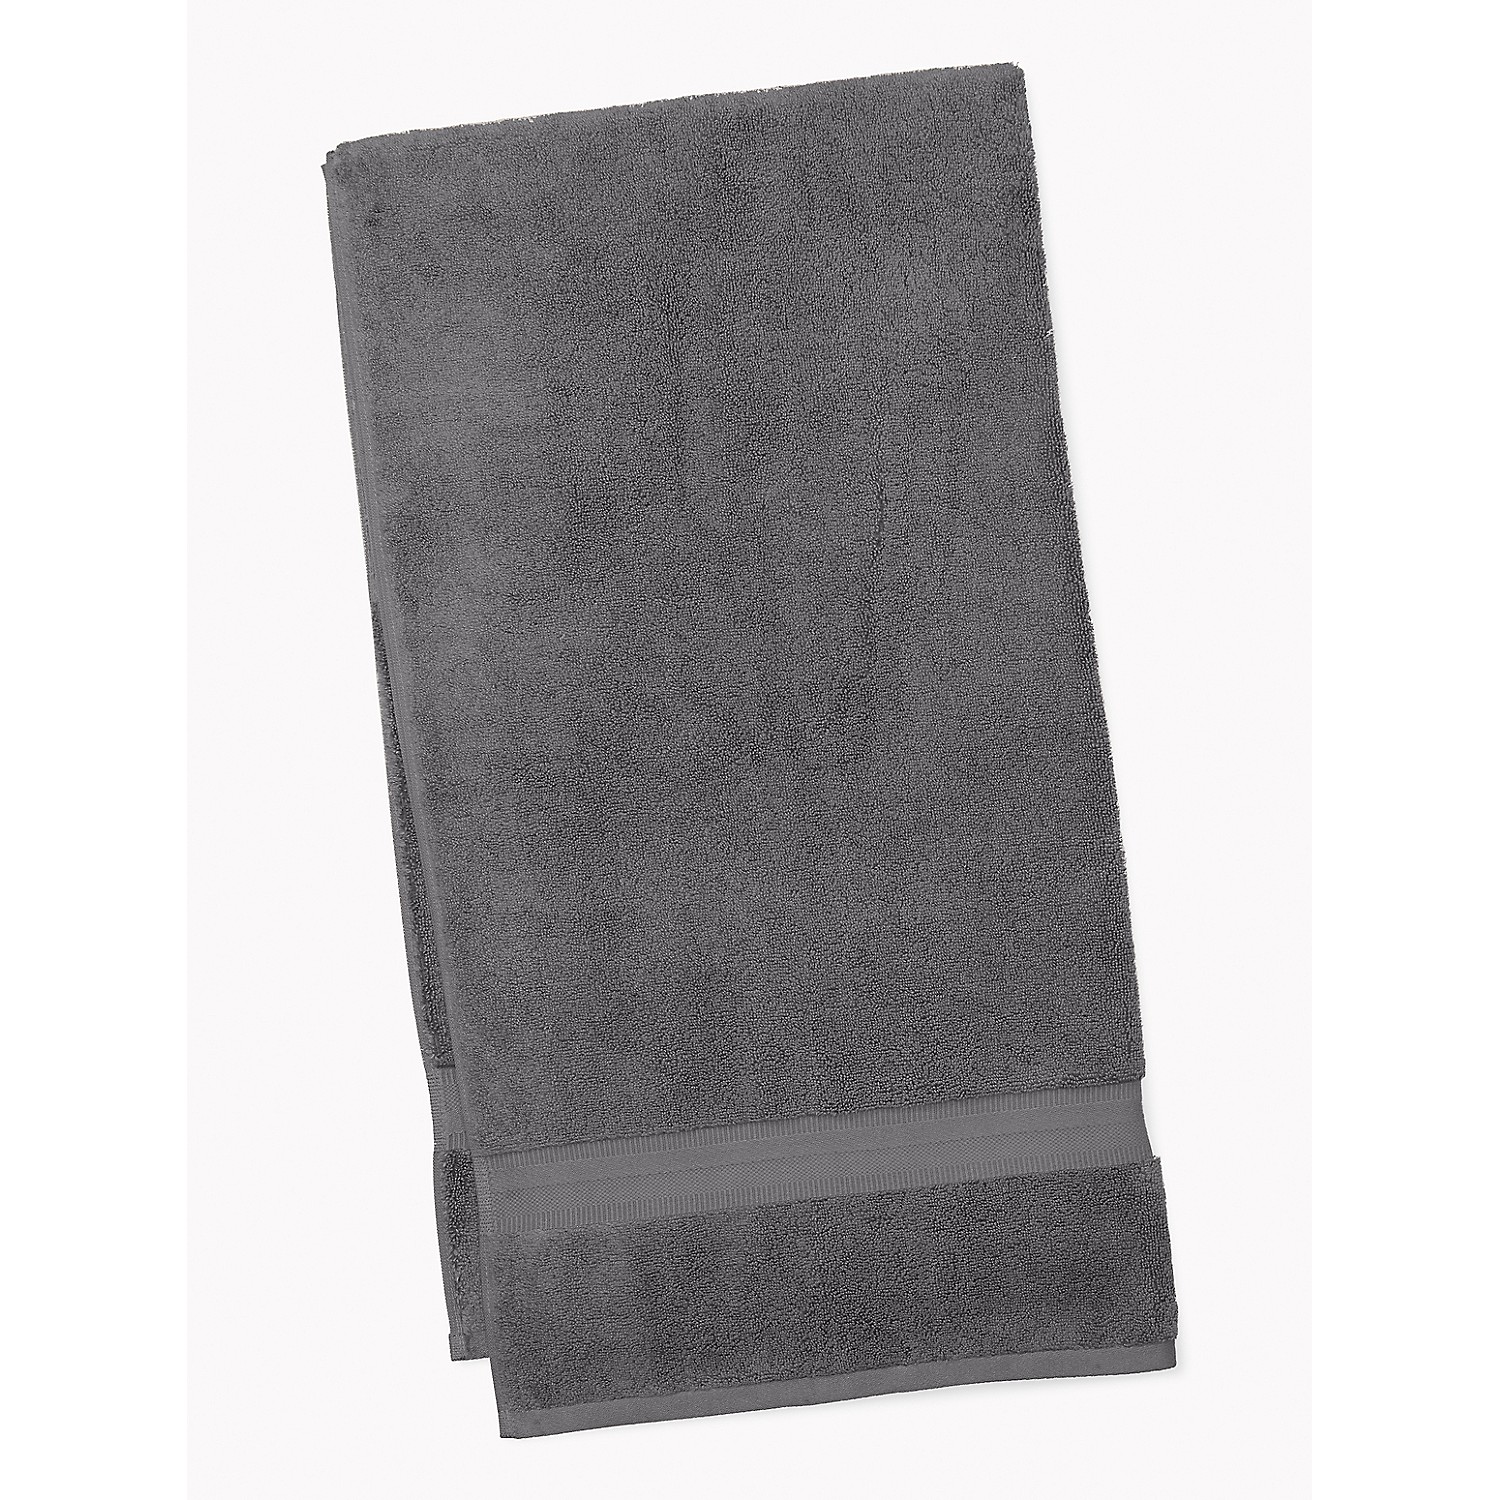 TOMMY HILFIGER Signature Solid Bath Towel in Dark Gray